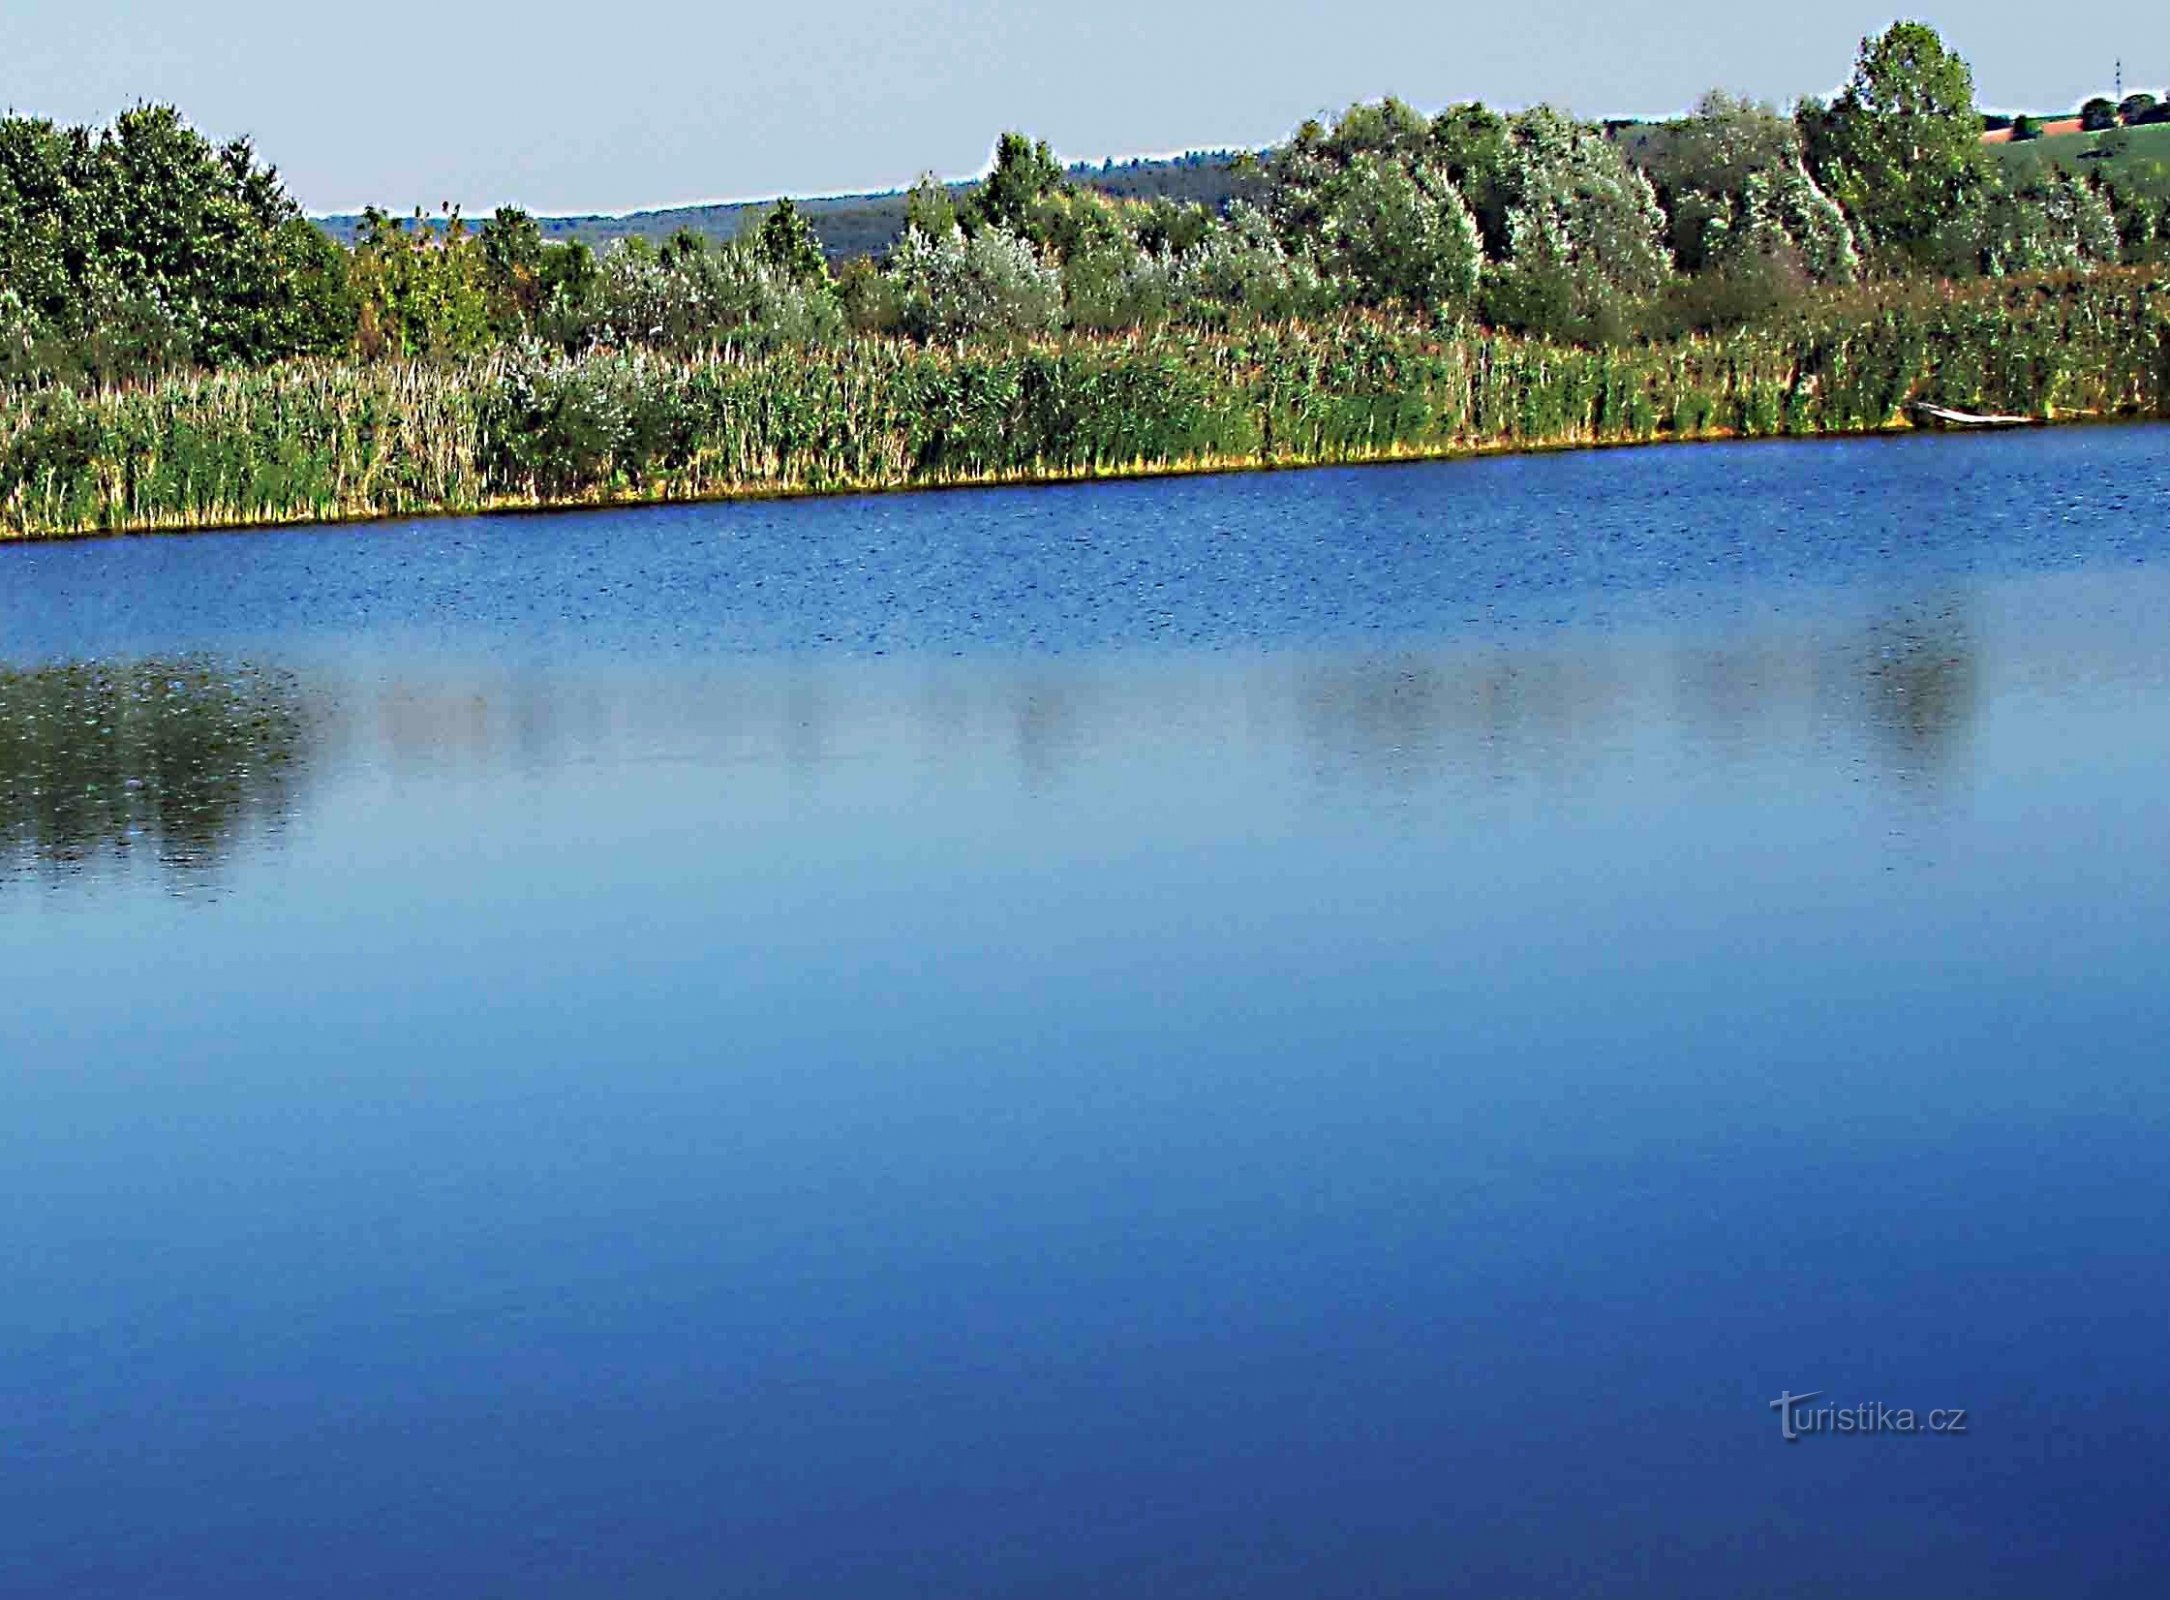 Os lagos ao redor de Spytihněvi e o cais